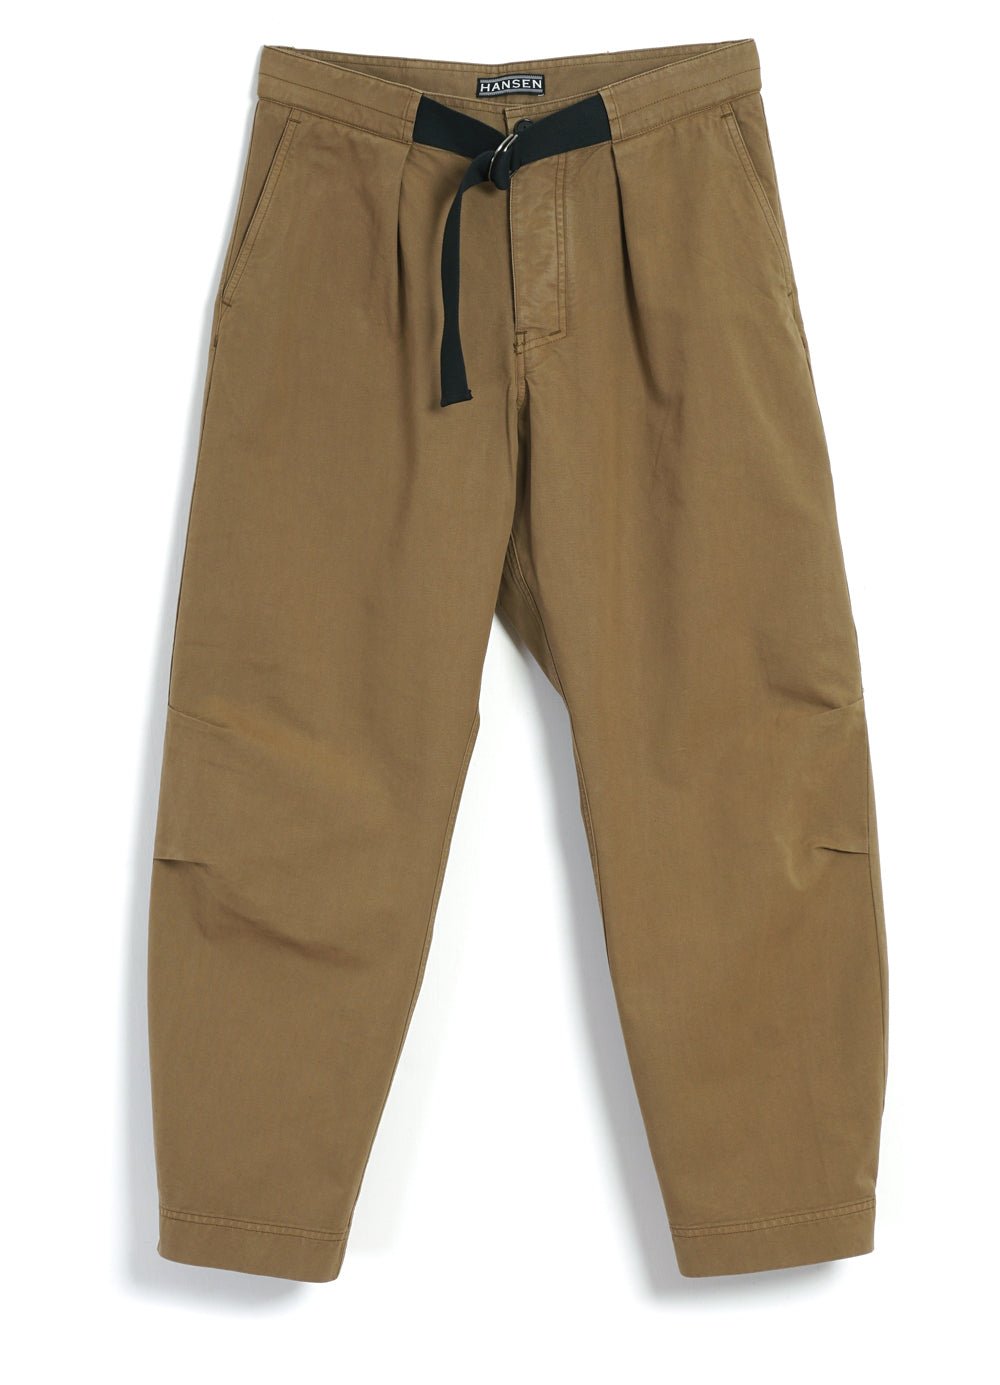 HANSEN GARMENTS - KARLO | Wide Cut Utility Trousers | Khaki - HANSEN Garments